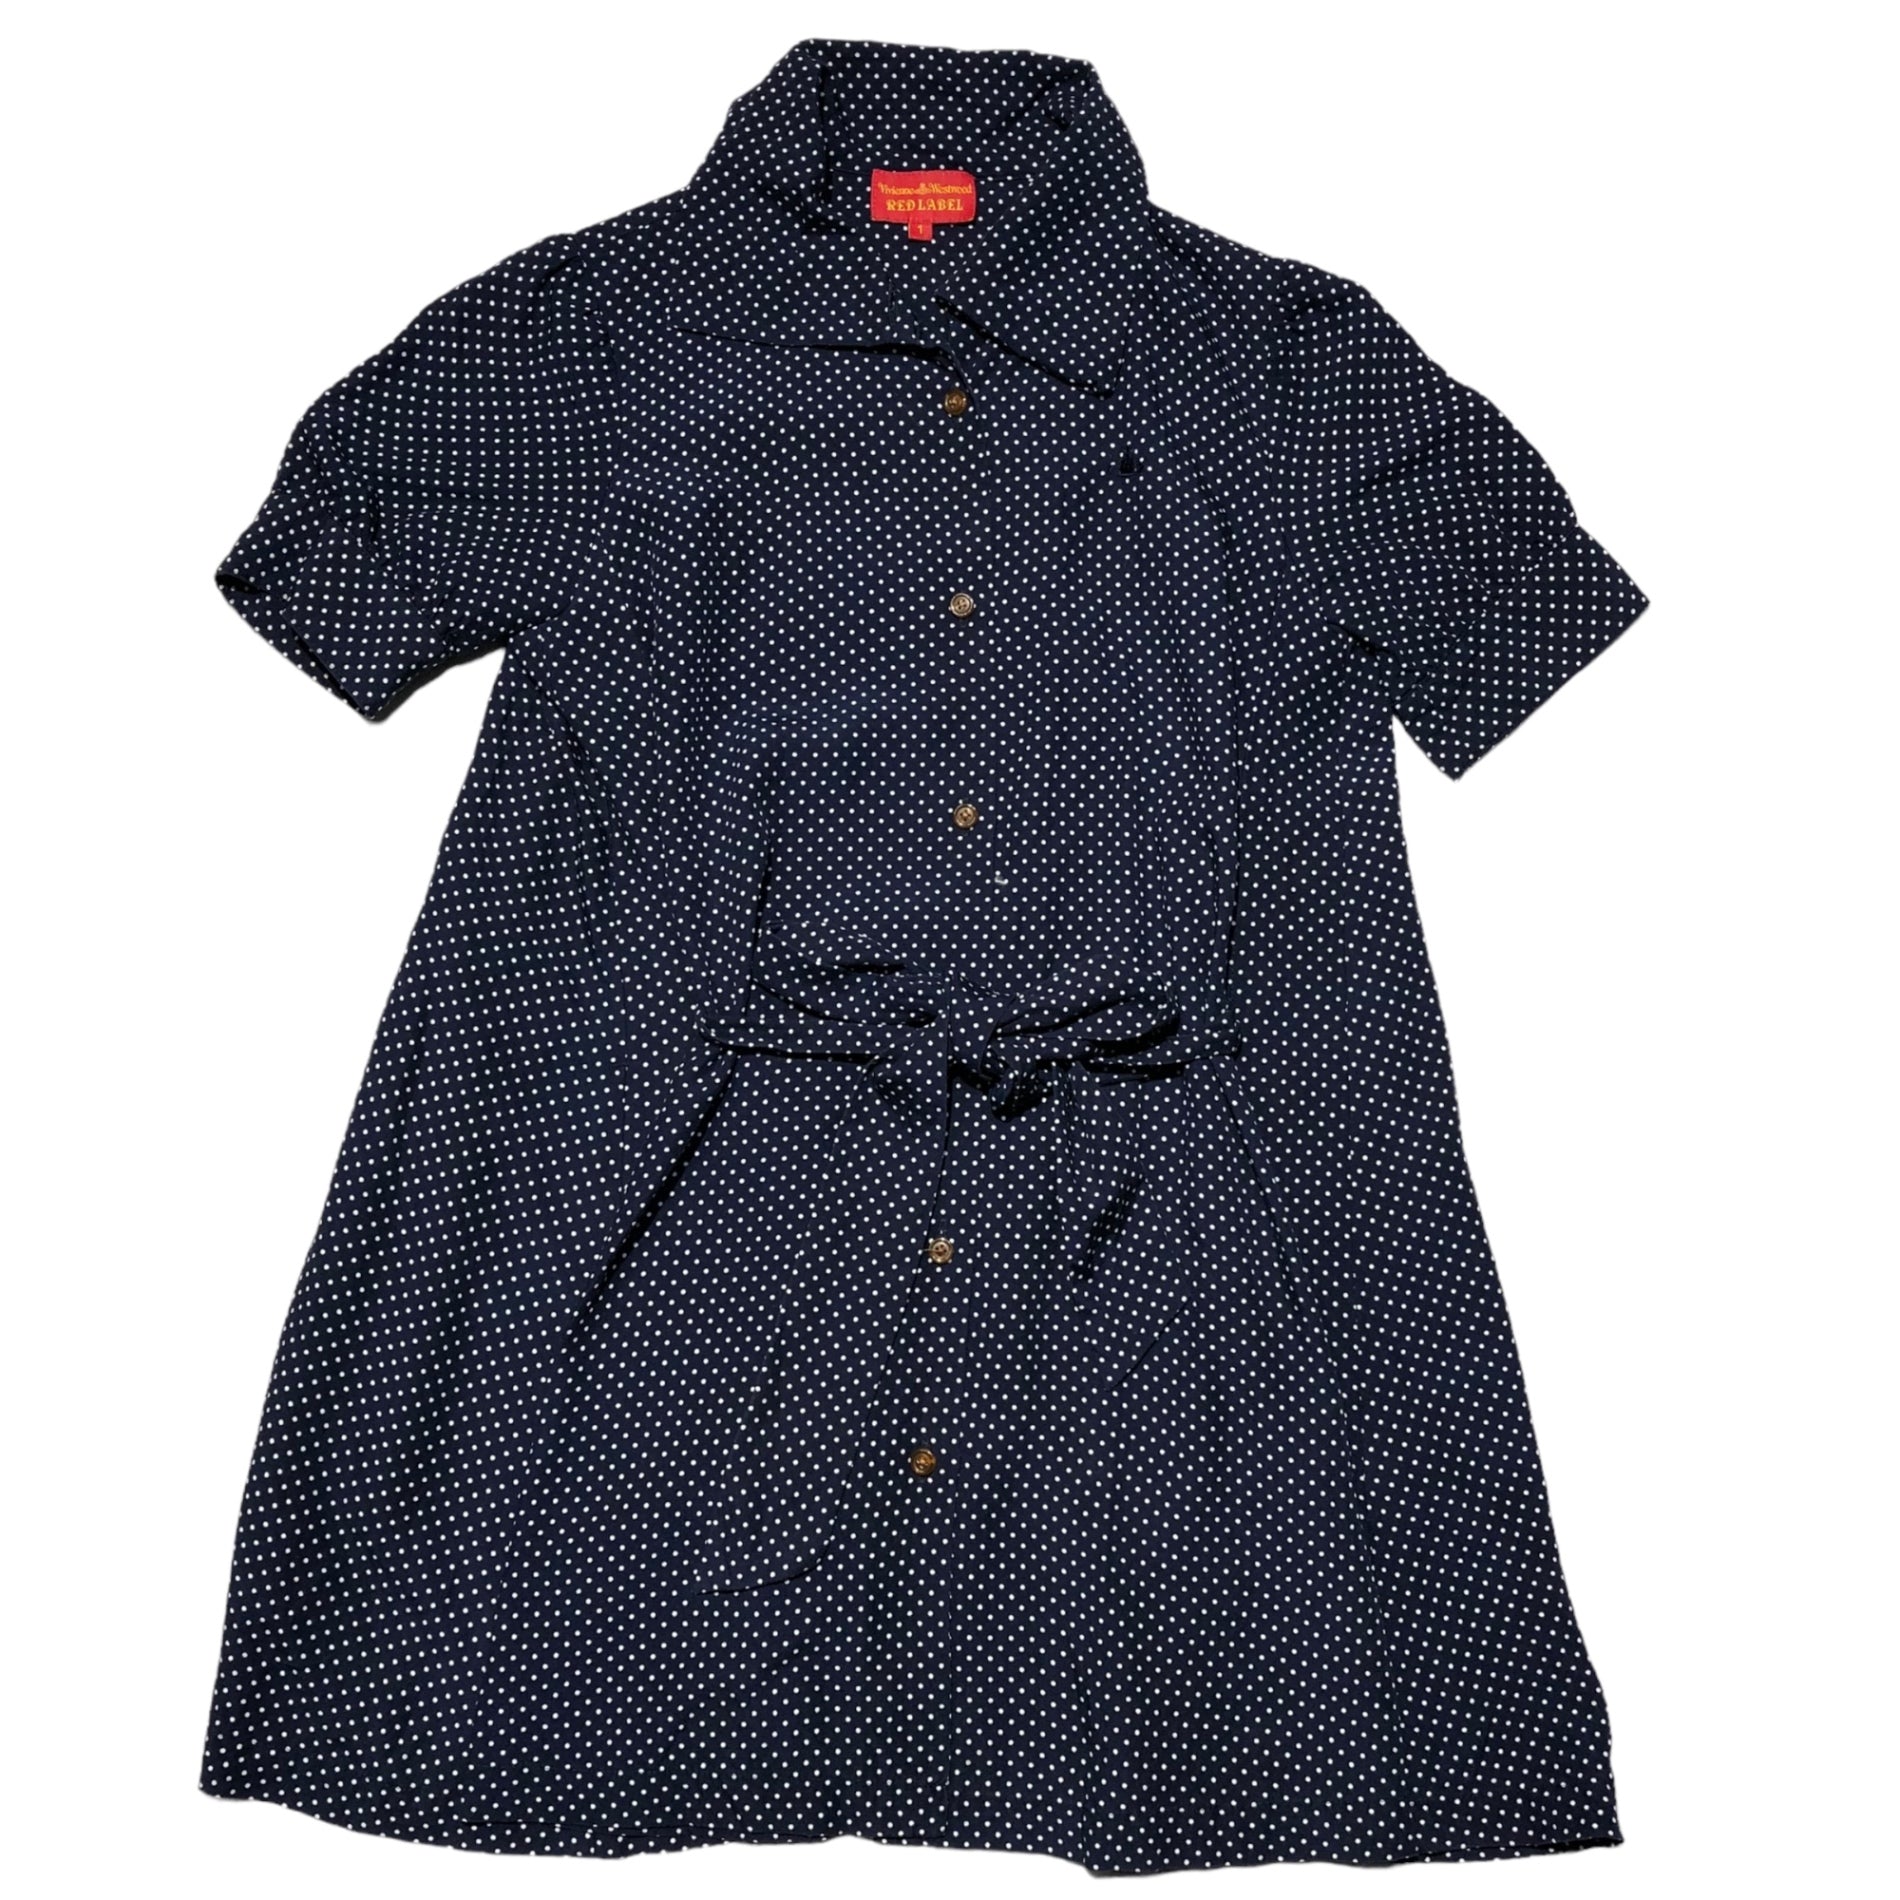 Vivienne Westwood RED LABEL(ヴィヴィアンウエストウッドレッドレーベル) 00's short sleeve dot blouse ショート スリーブ ドット ブラウス 357-01-59003 1(S程度) ネイビー×ホワイト ワンピース チュニック